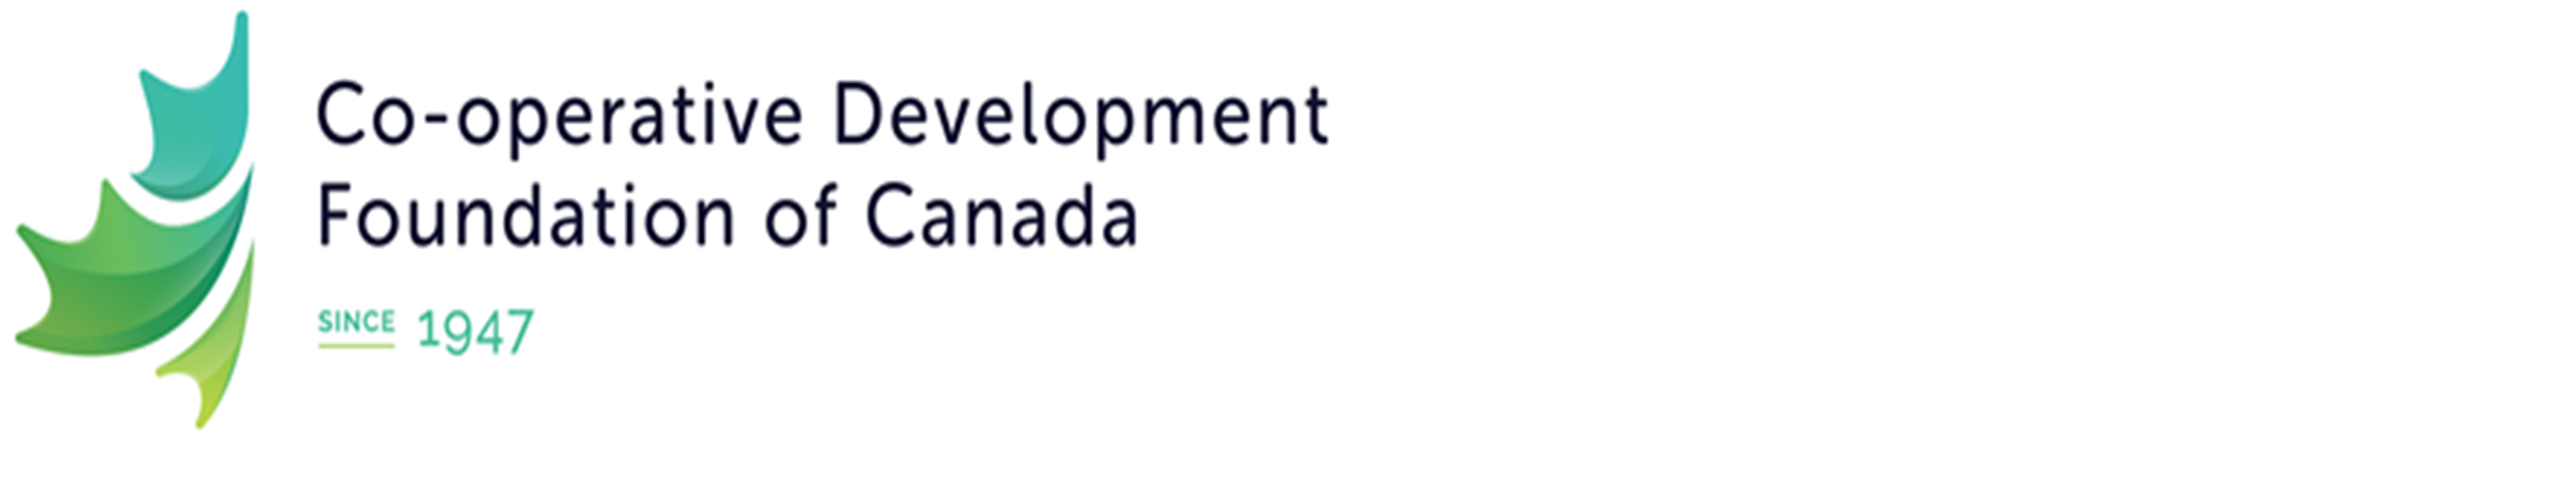 Co-operative Development Foundation Canada logo